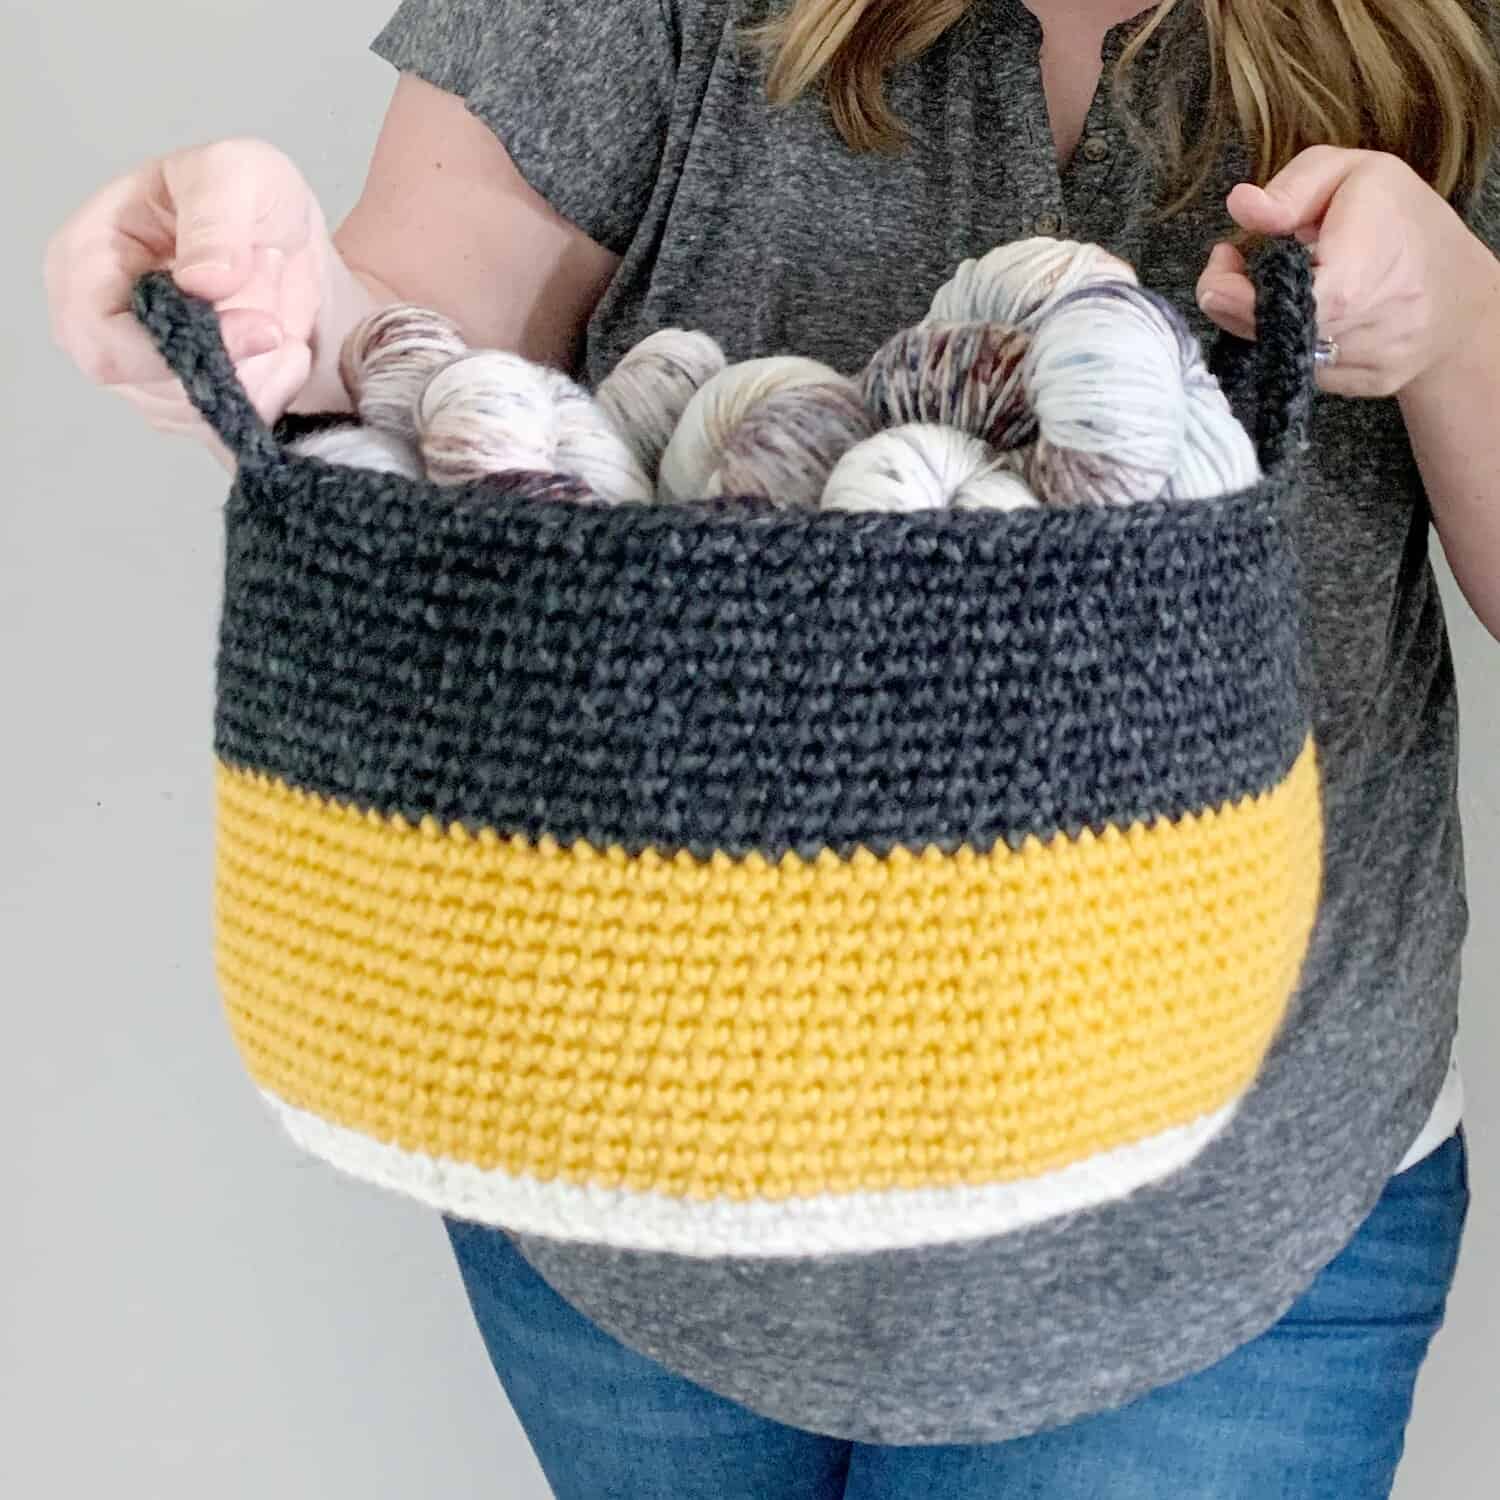 Crocheted Yarn basket